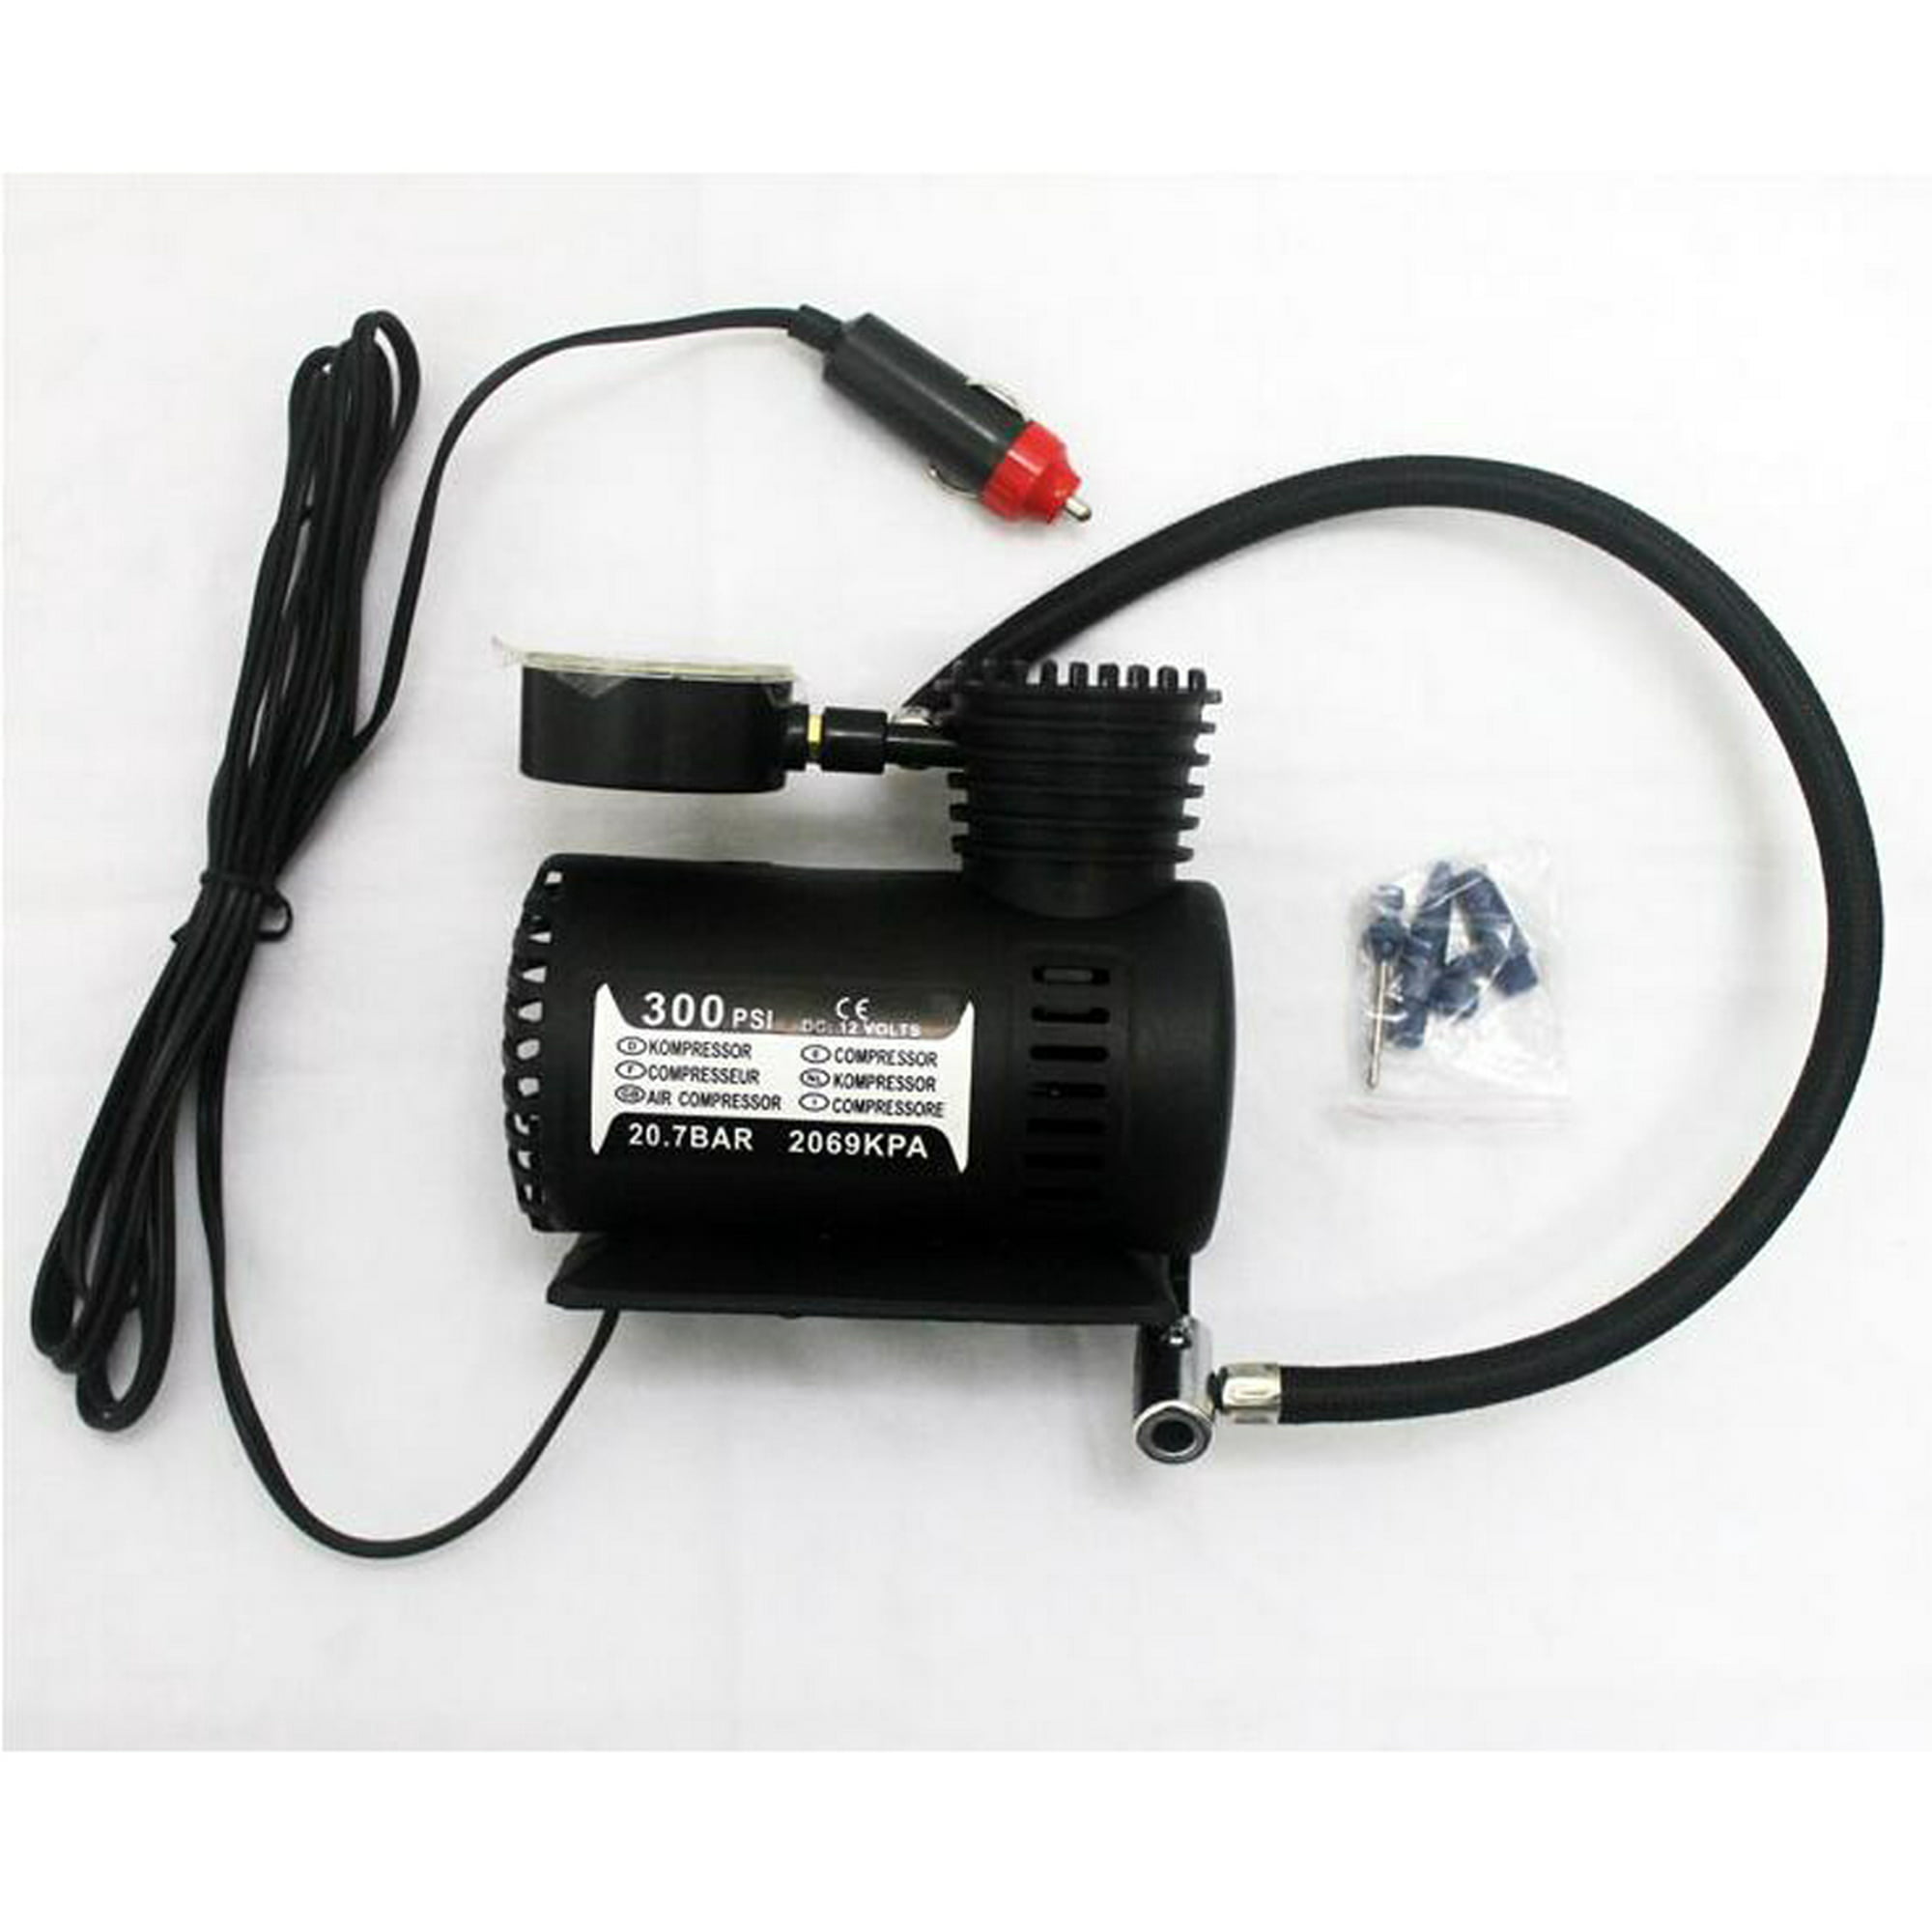 Mini compresor de aire portátil inflado rápido LED para bicicletas cableado  Yotijar Bomba de aire para neumáticos